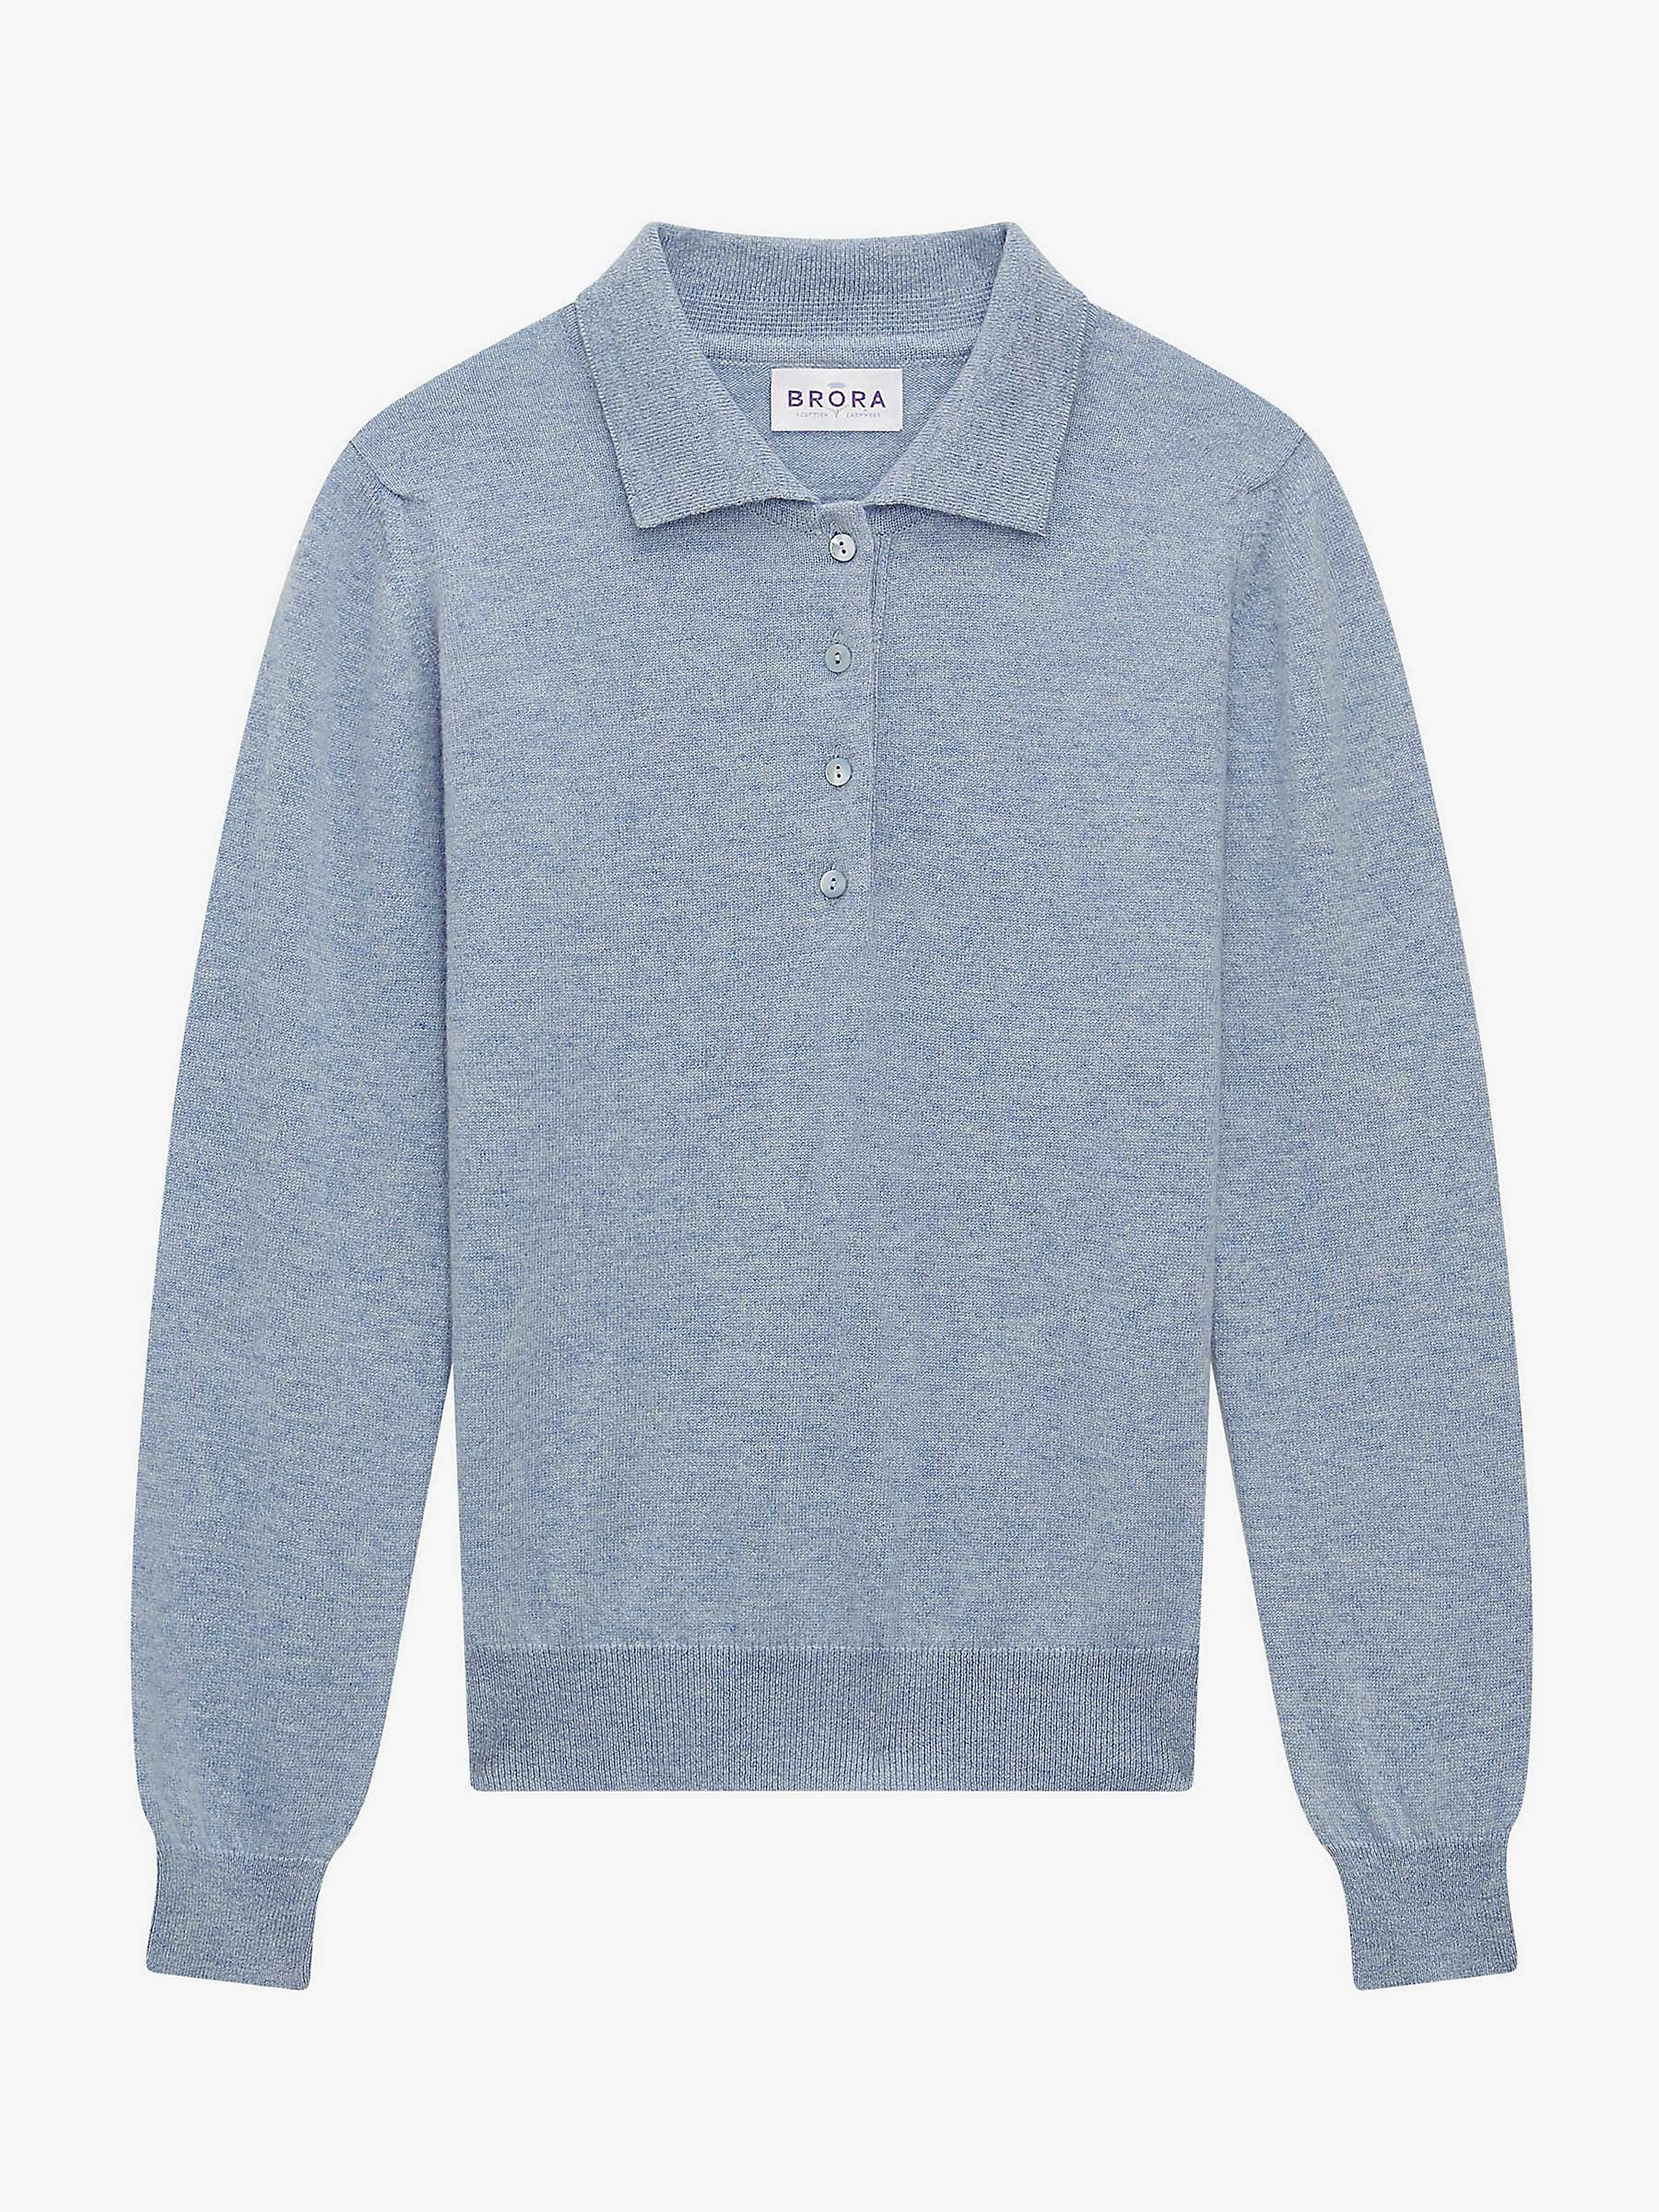 Buy Brora Cashmere Polo Shirt, Glacier Online at johnlewis.com